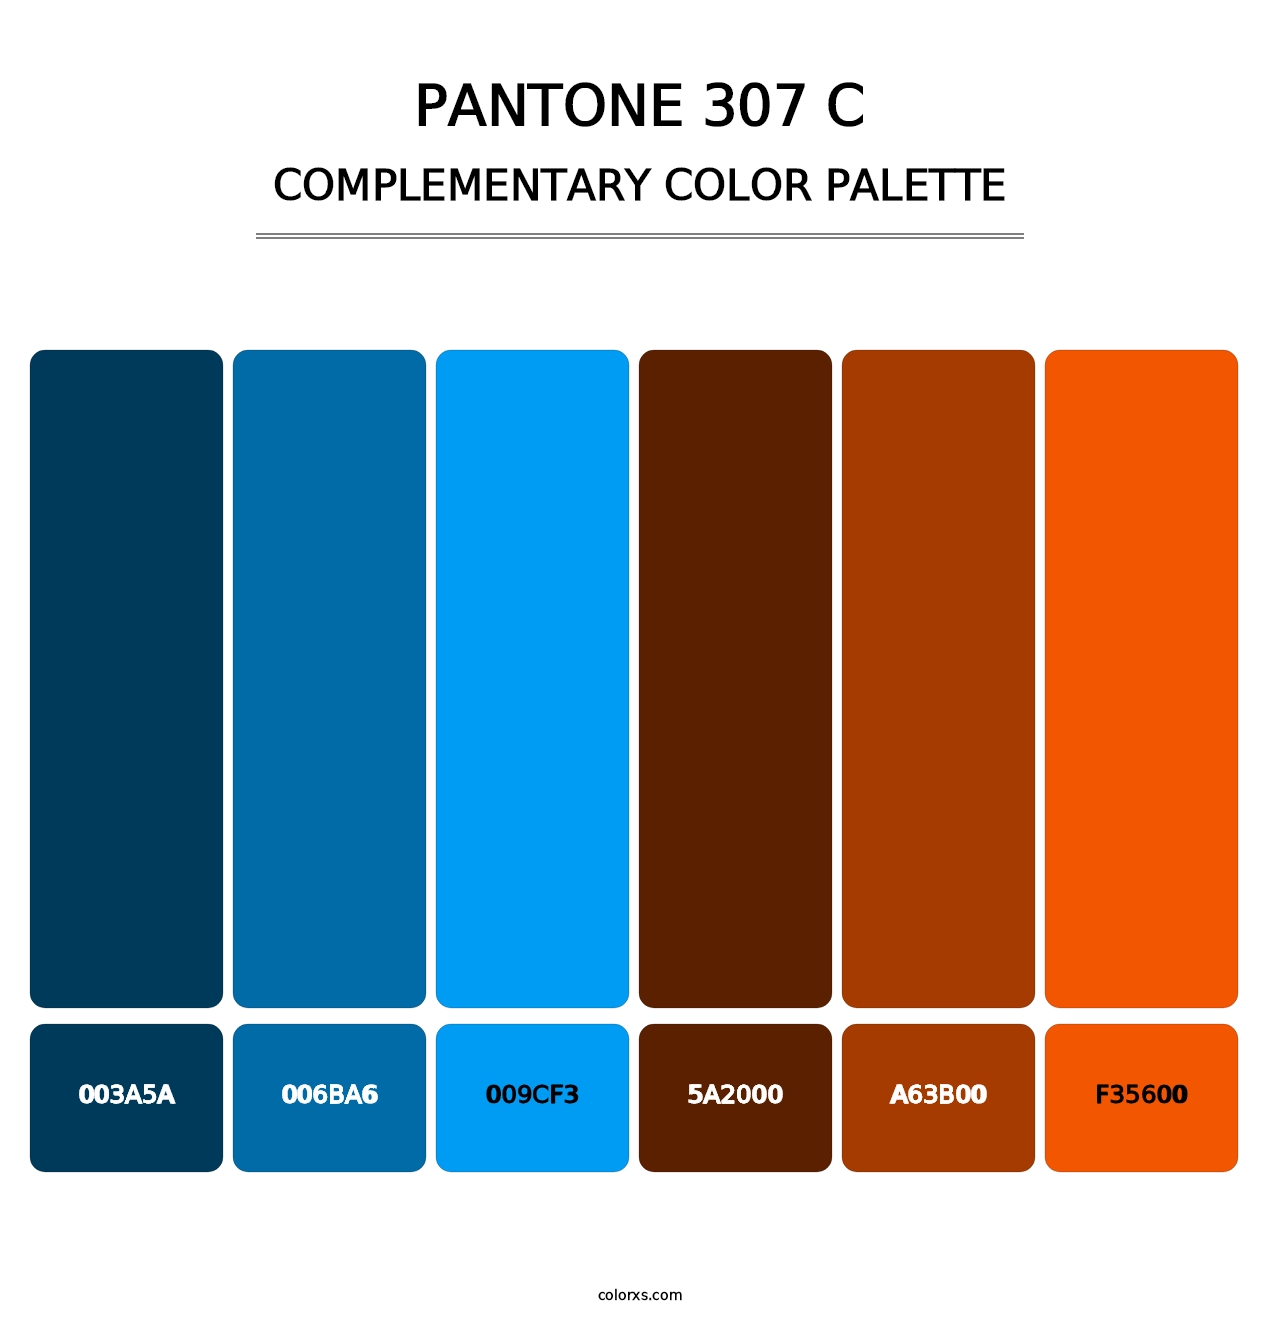 PANTONE 307 C - Complementary Color Palette